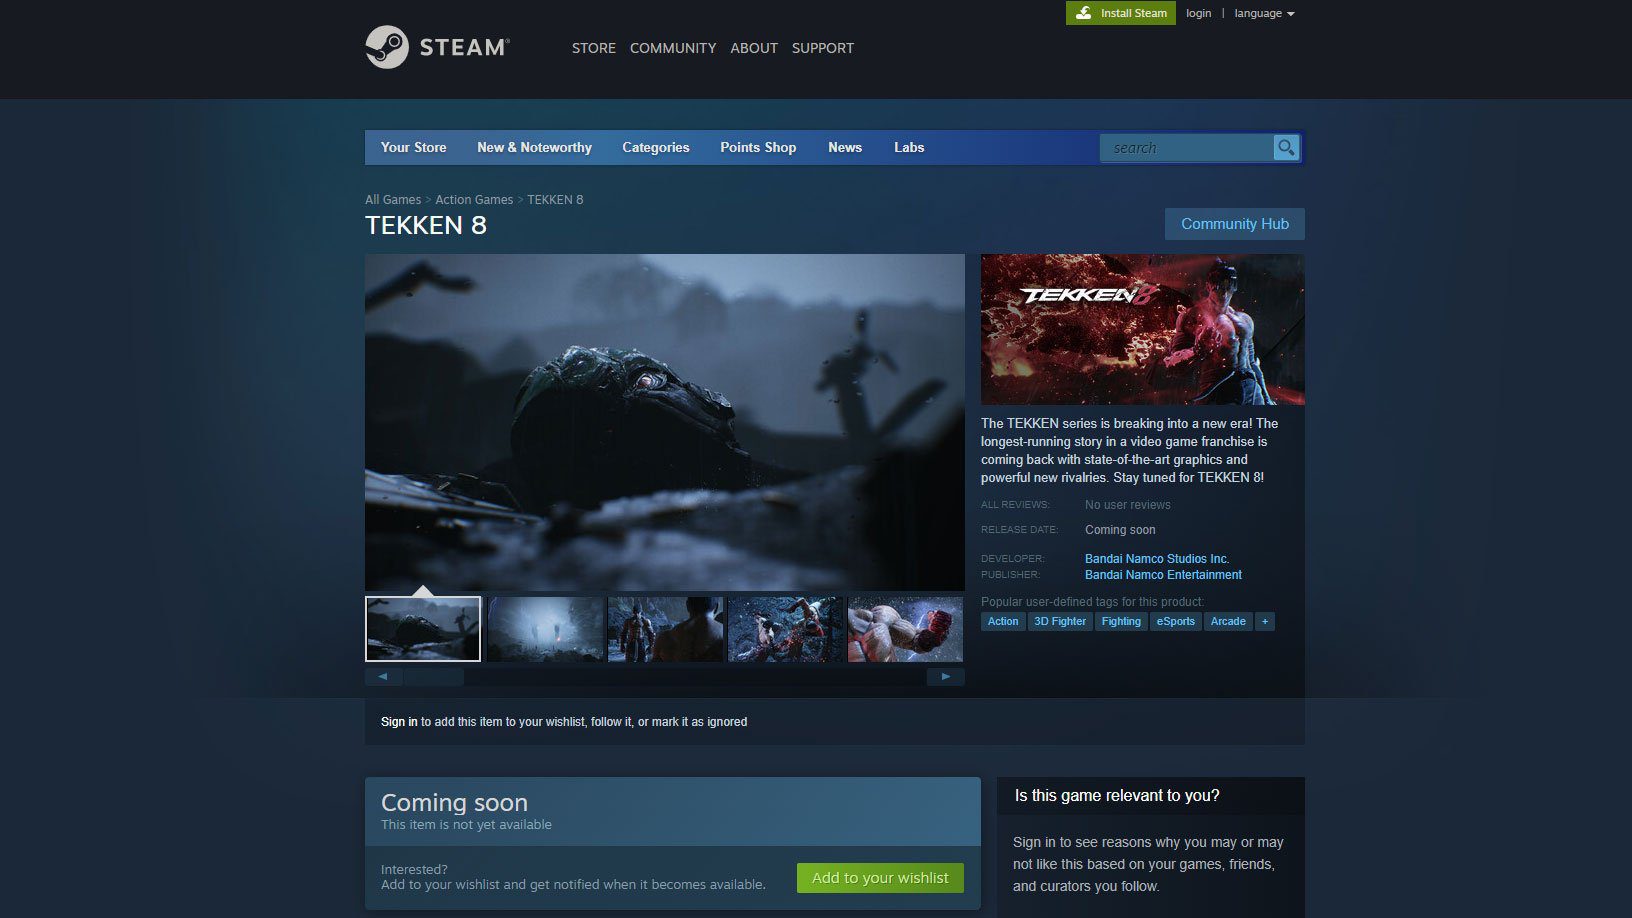 Tekken 8 product page appears on Steam